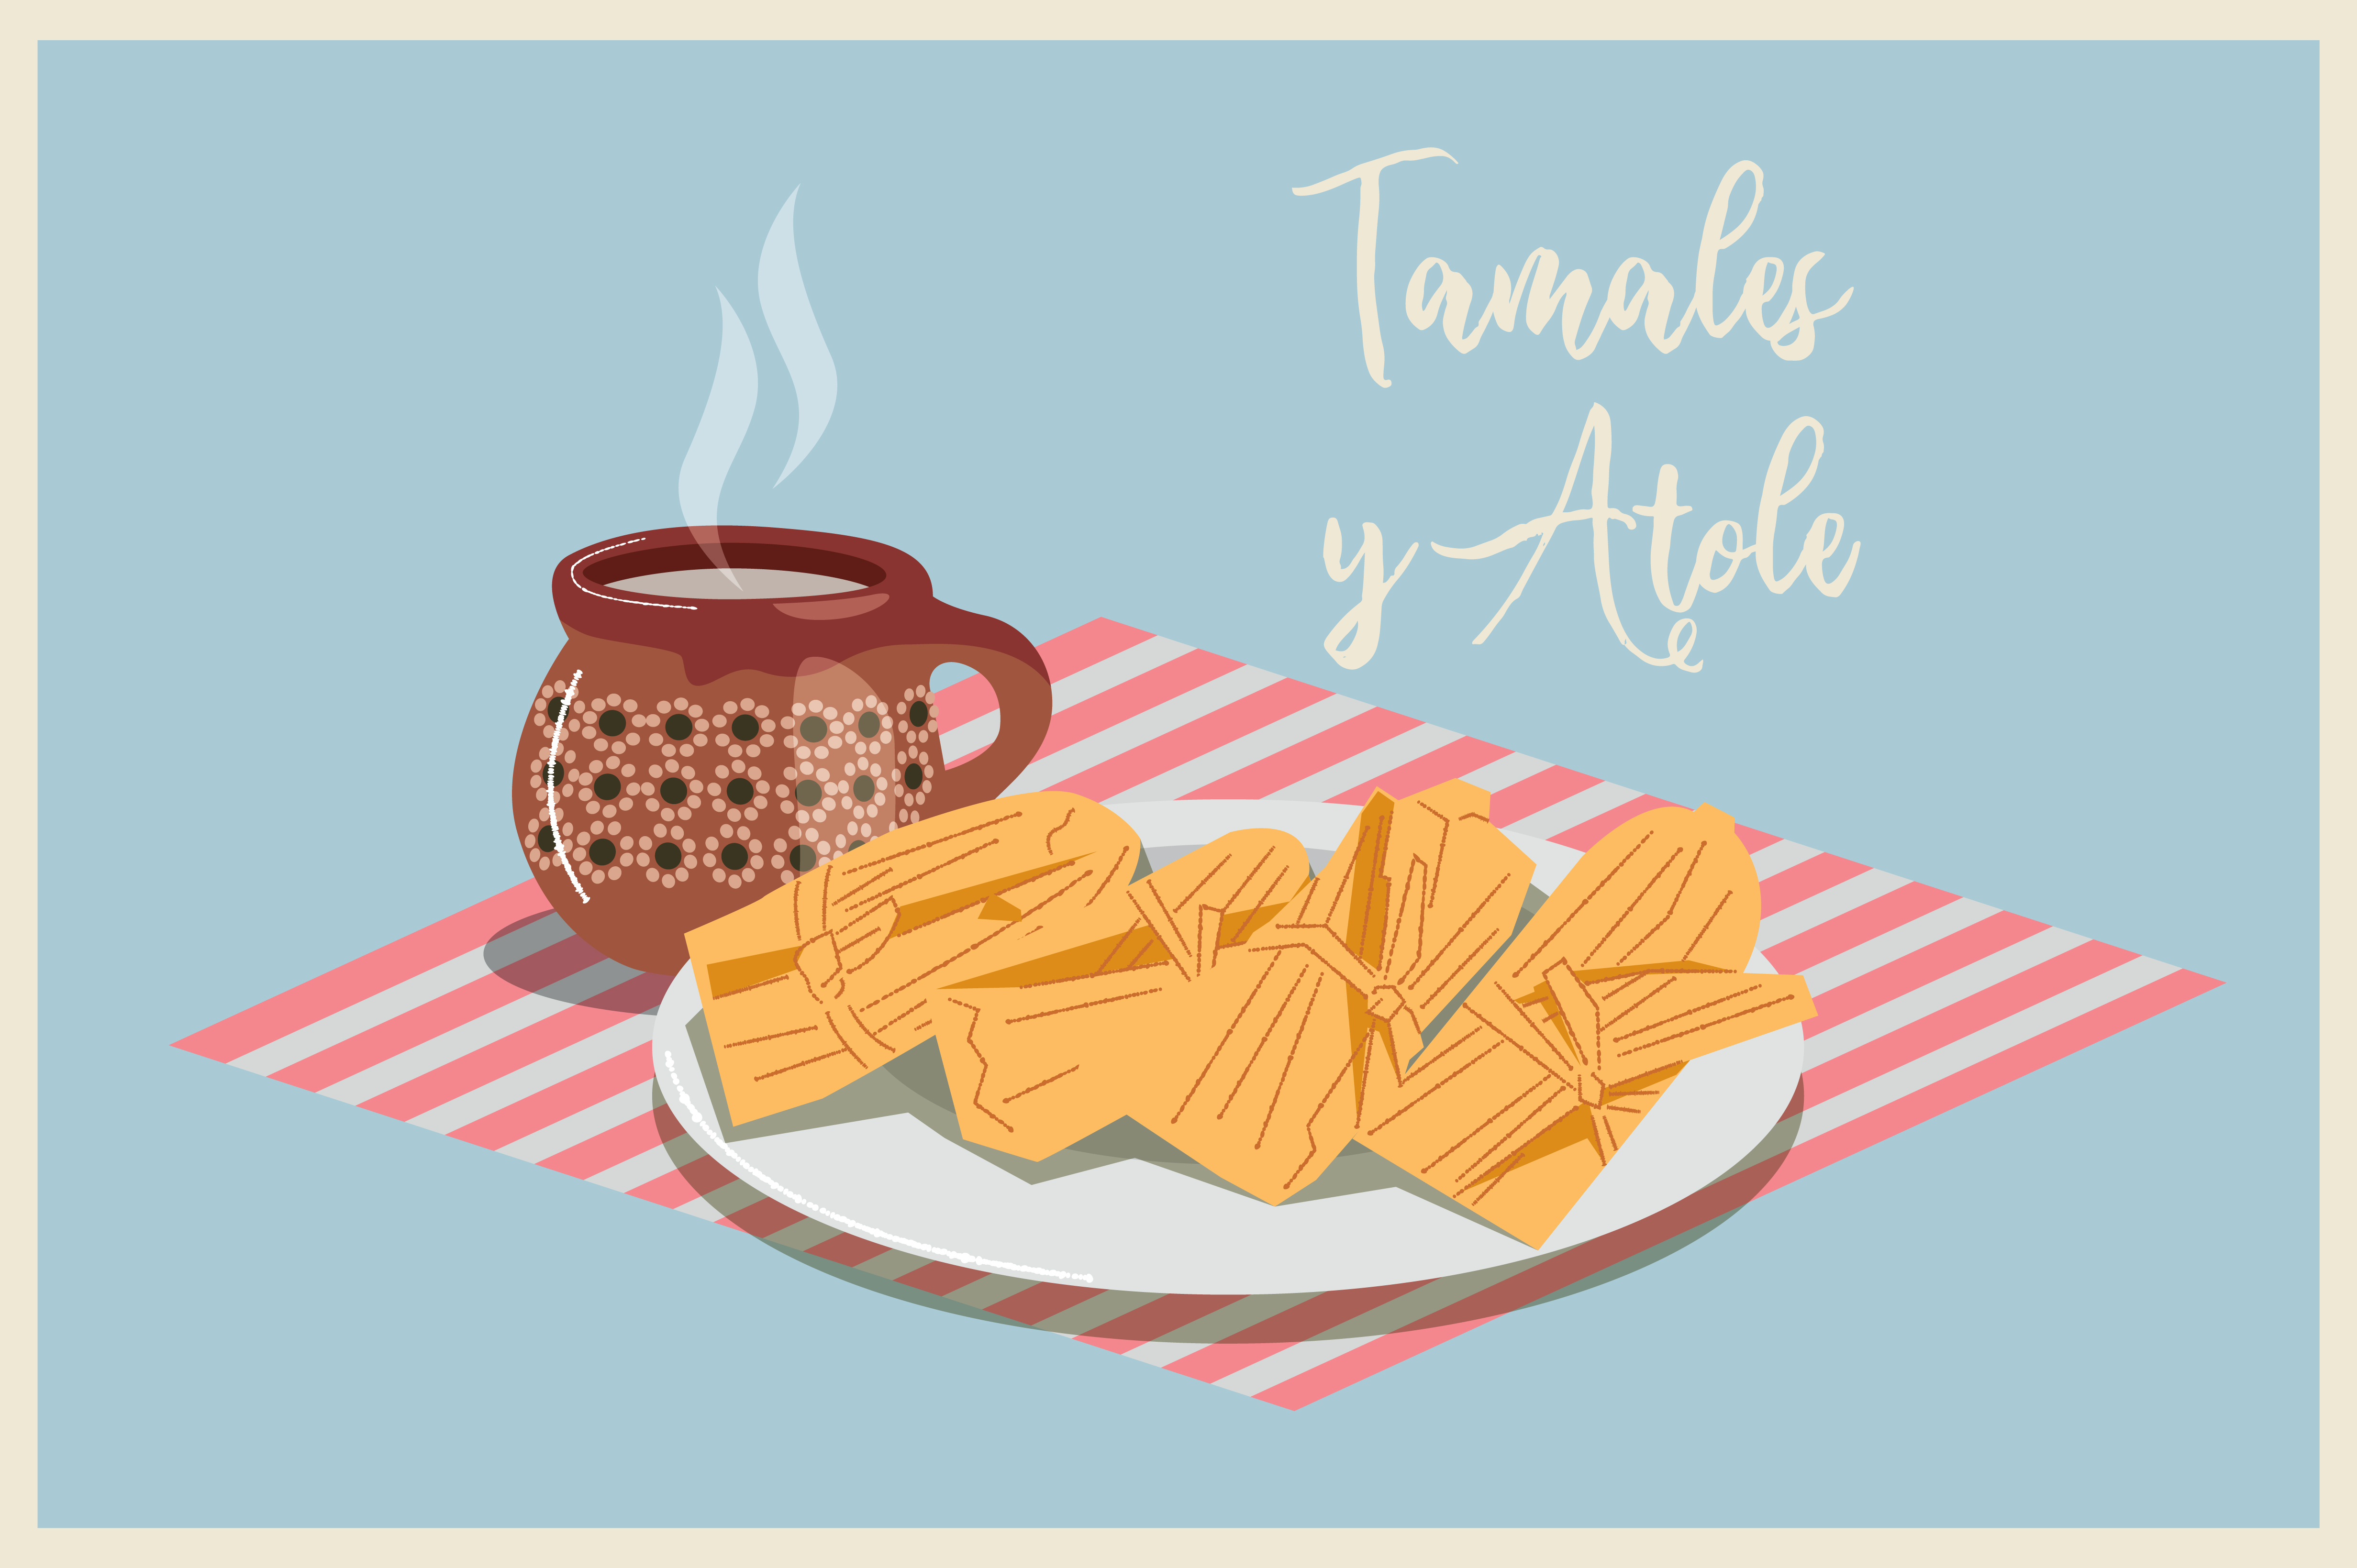 Por qué en México acostumbramos comer tamales con atole